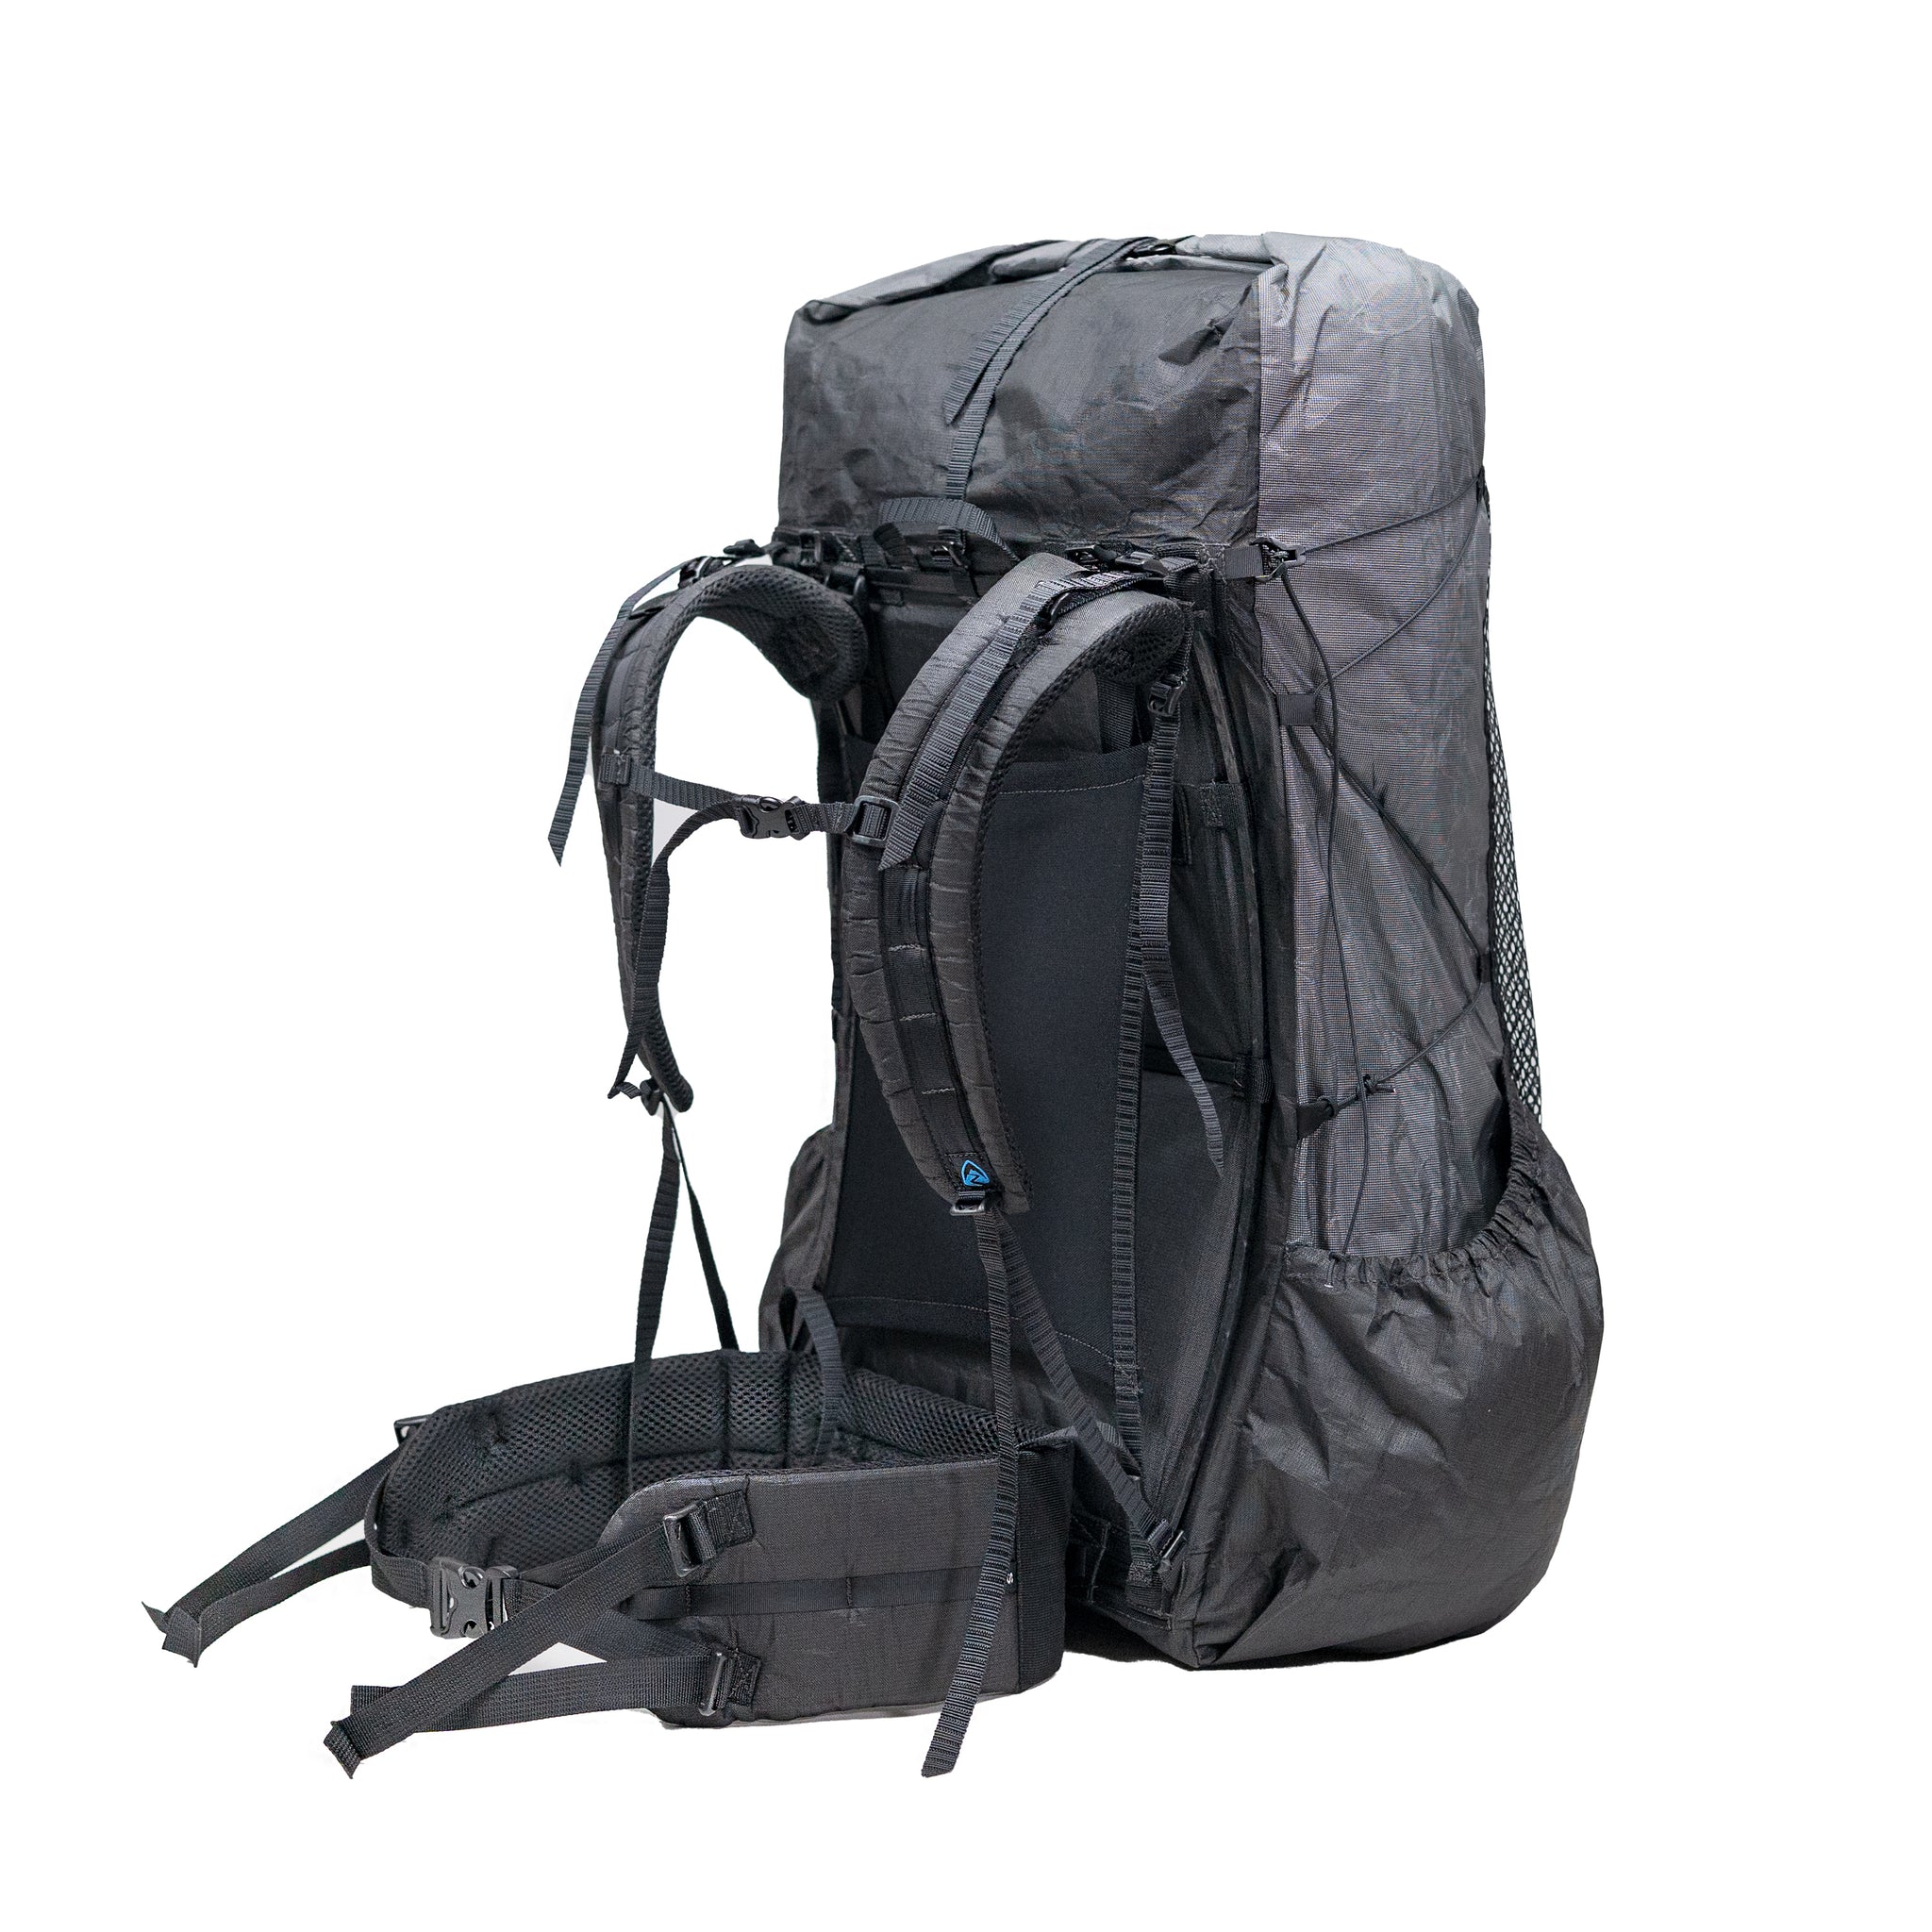 ZPacks.com Ultralight Backpacking Gear - Shoulder Strap Pads